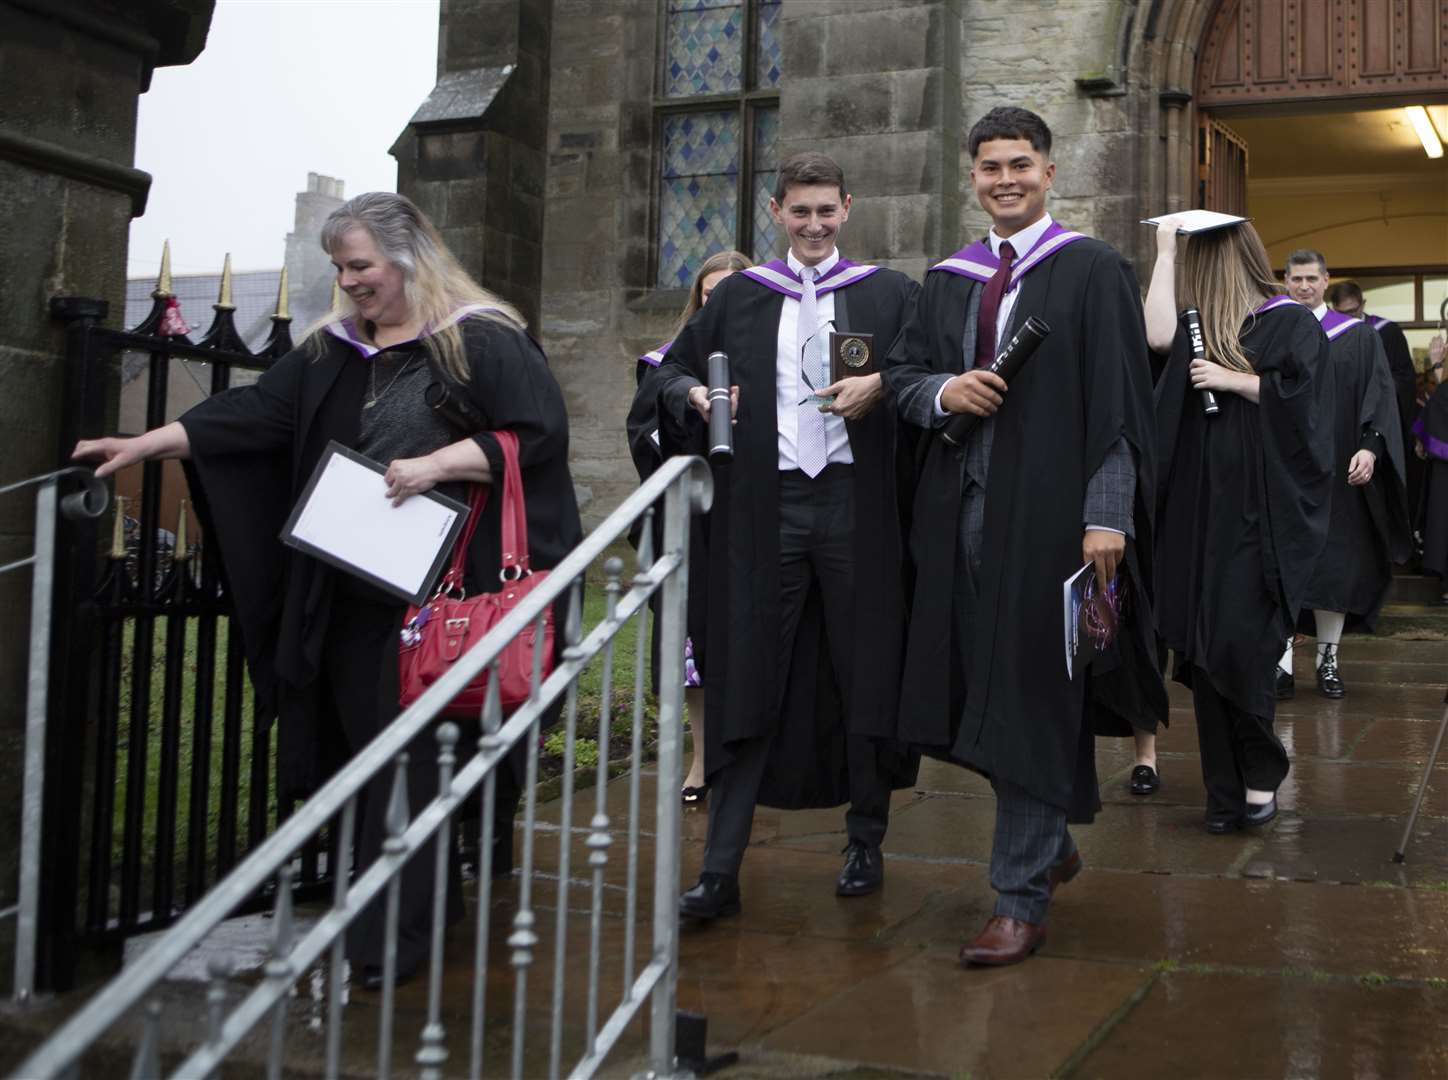 Graduates leaving the church.